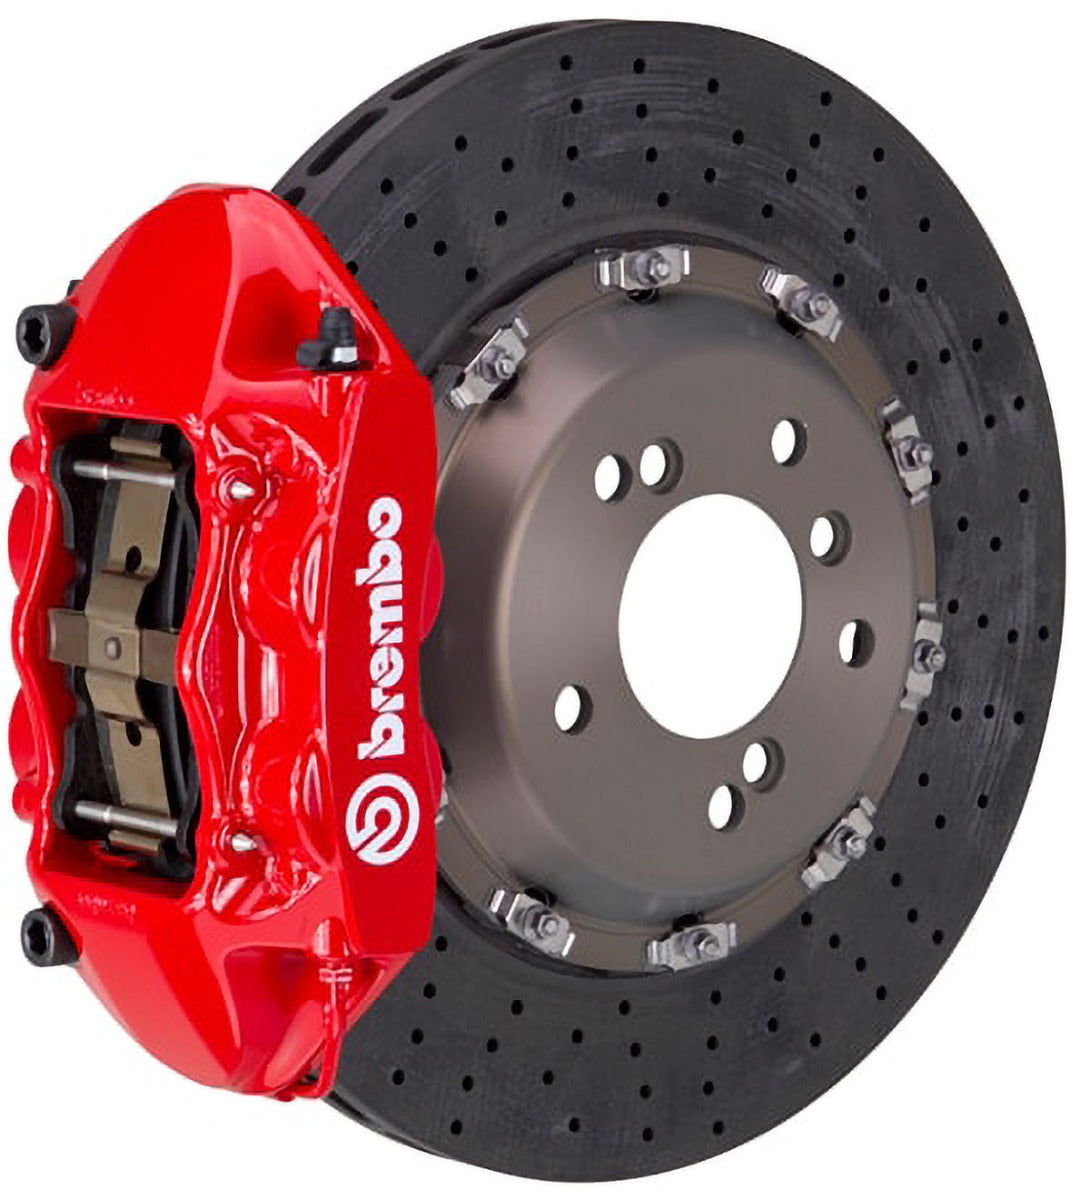 Brembo Logo Decal sticker vinyl caliper brake custom size - RED Color Set  of 6